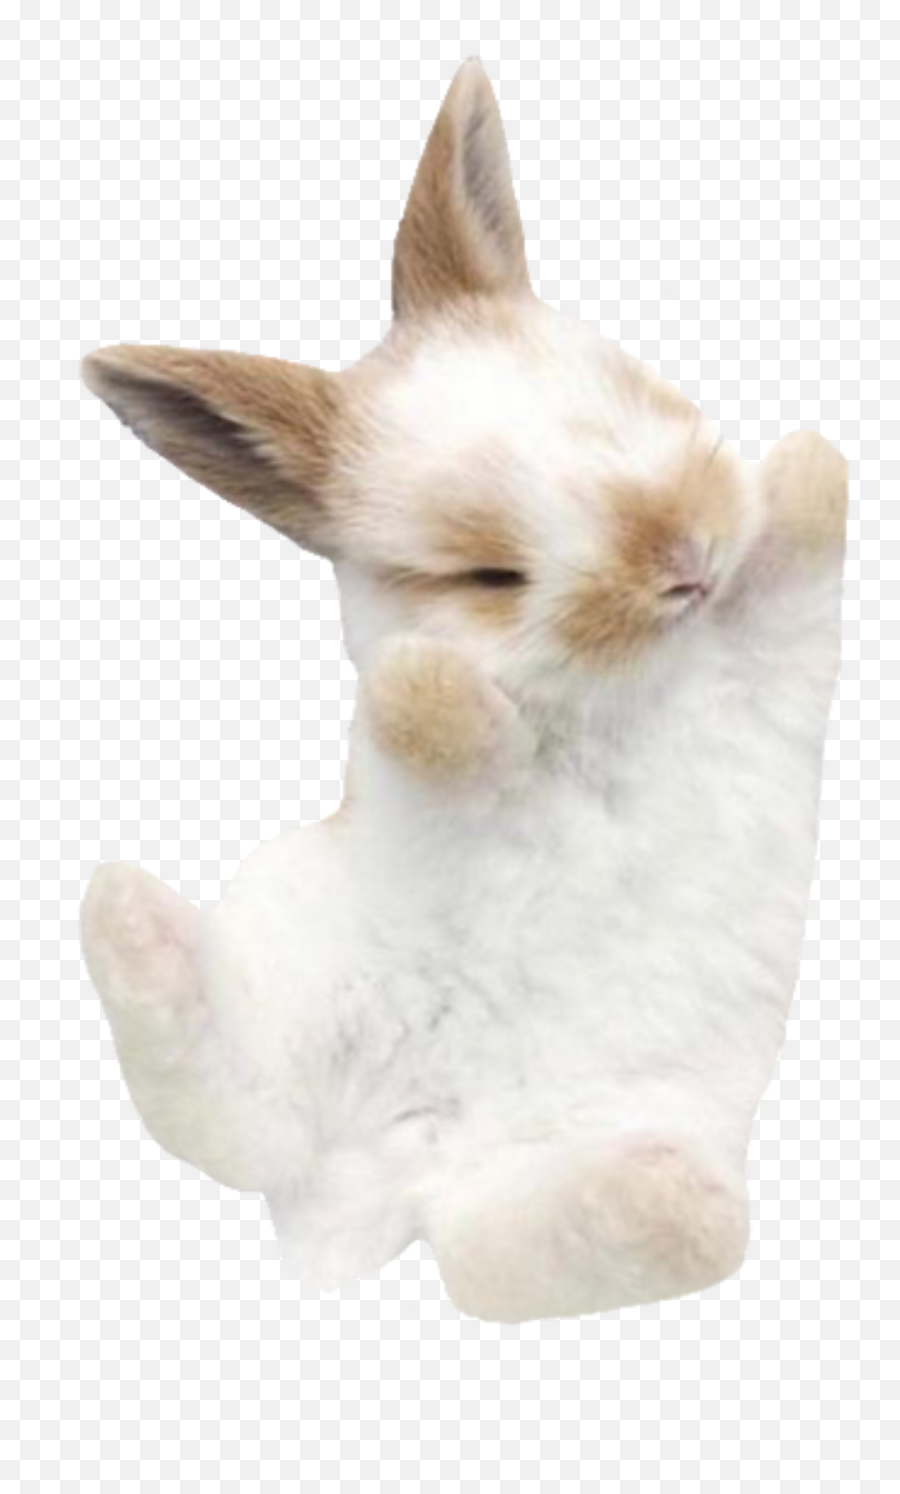 The Most Edited Cutebunny Picsart - Soft Emoji,Emoticon Rabbit Plush